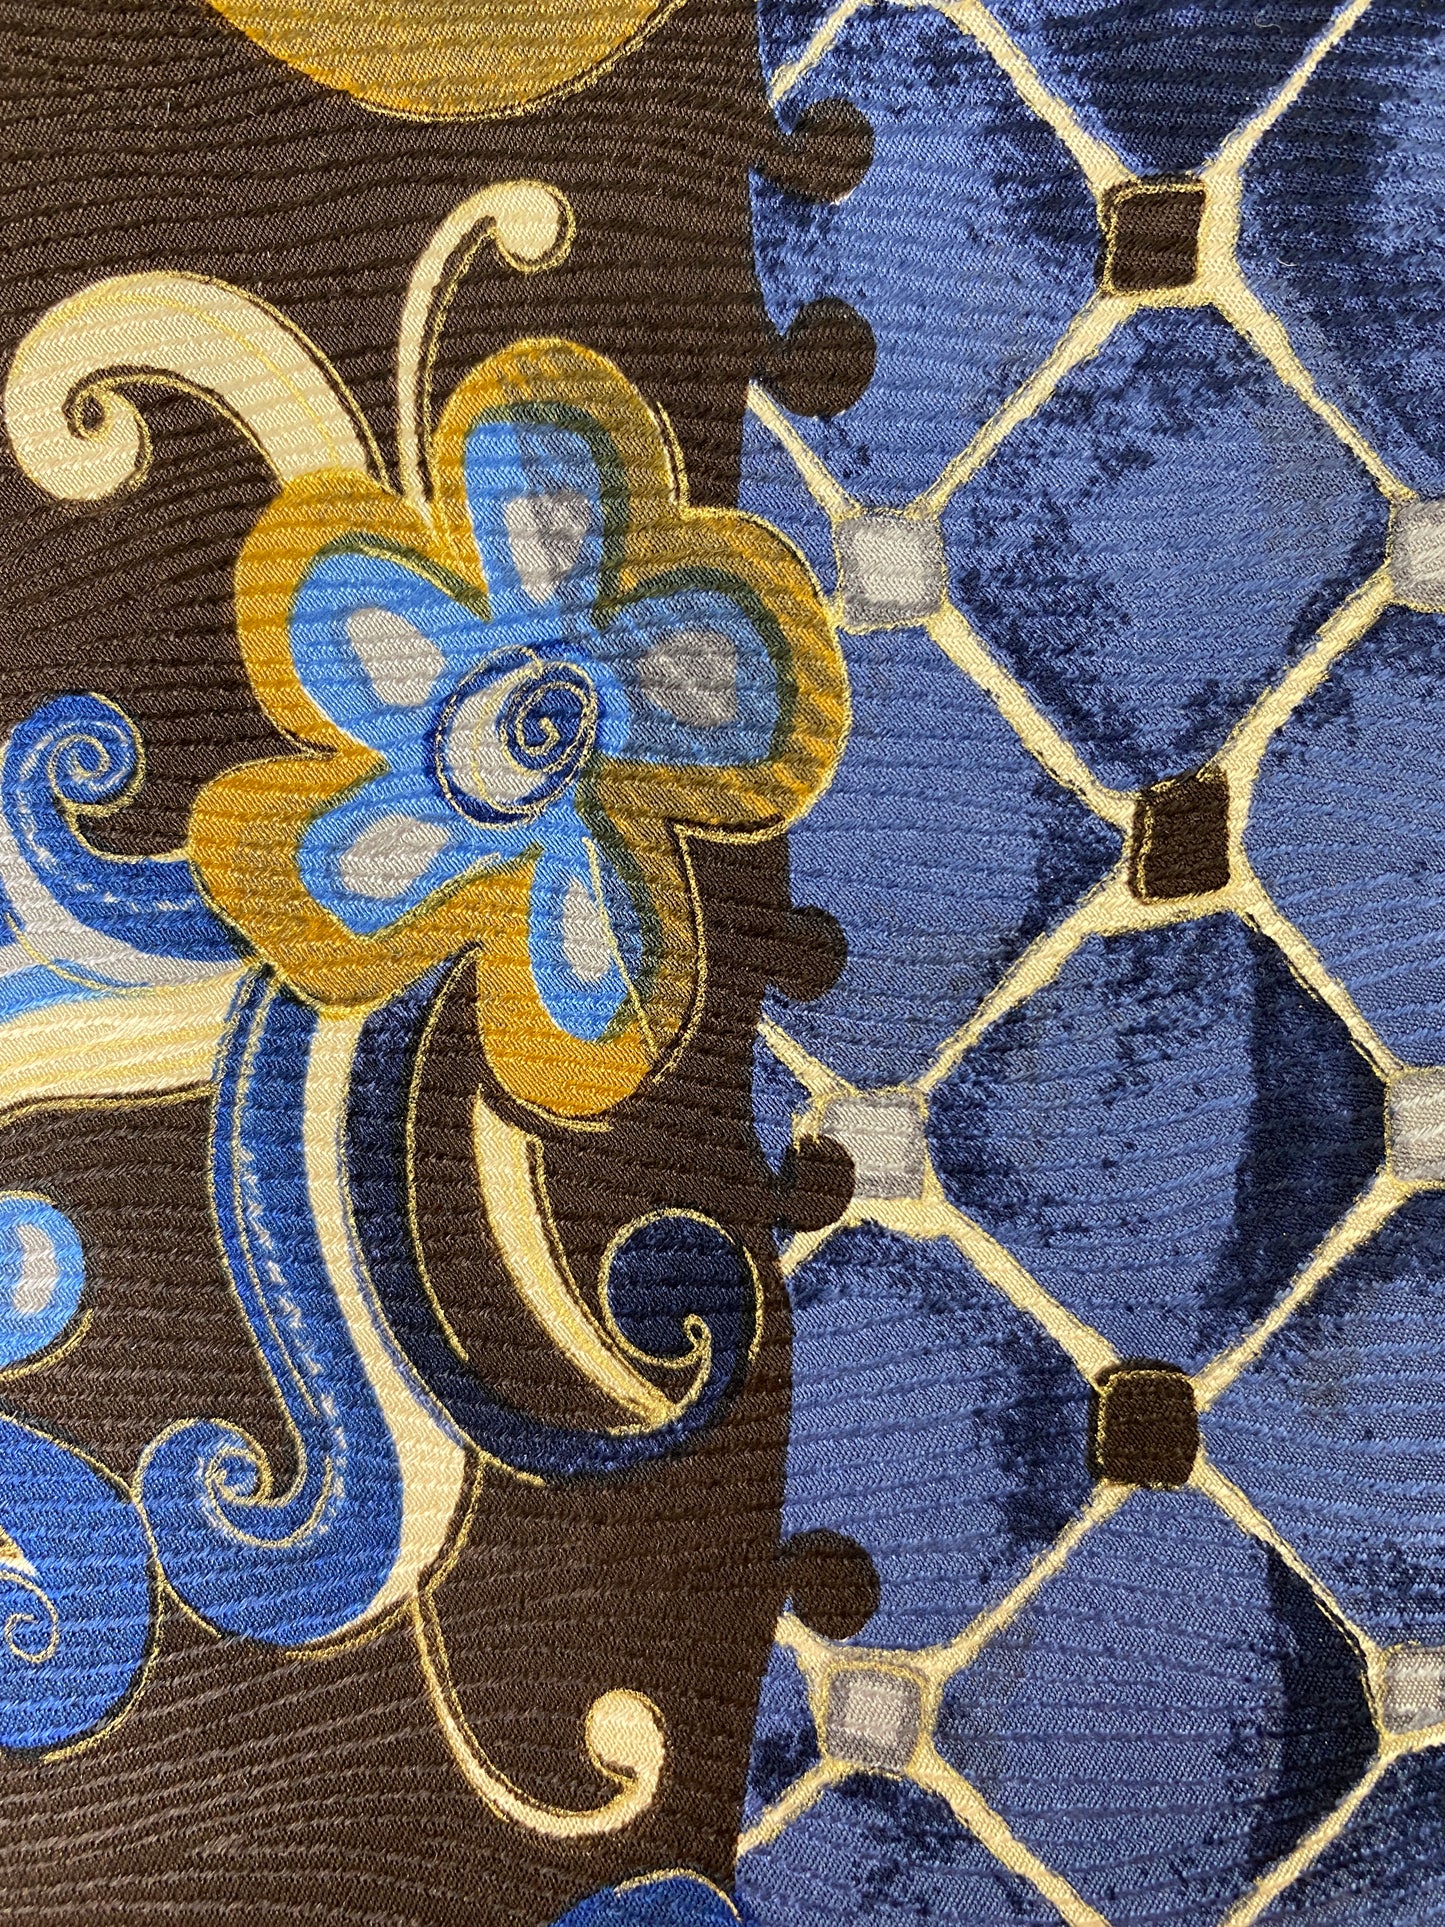 Close-up of: 90s Deadstock Silk Necktie, Men's Vintage Blue/ Brown/ Gold Oriental Print Tie, NOS